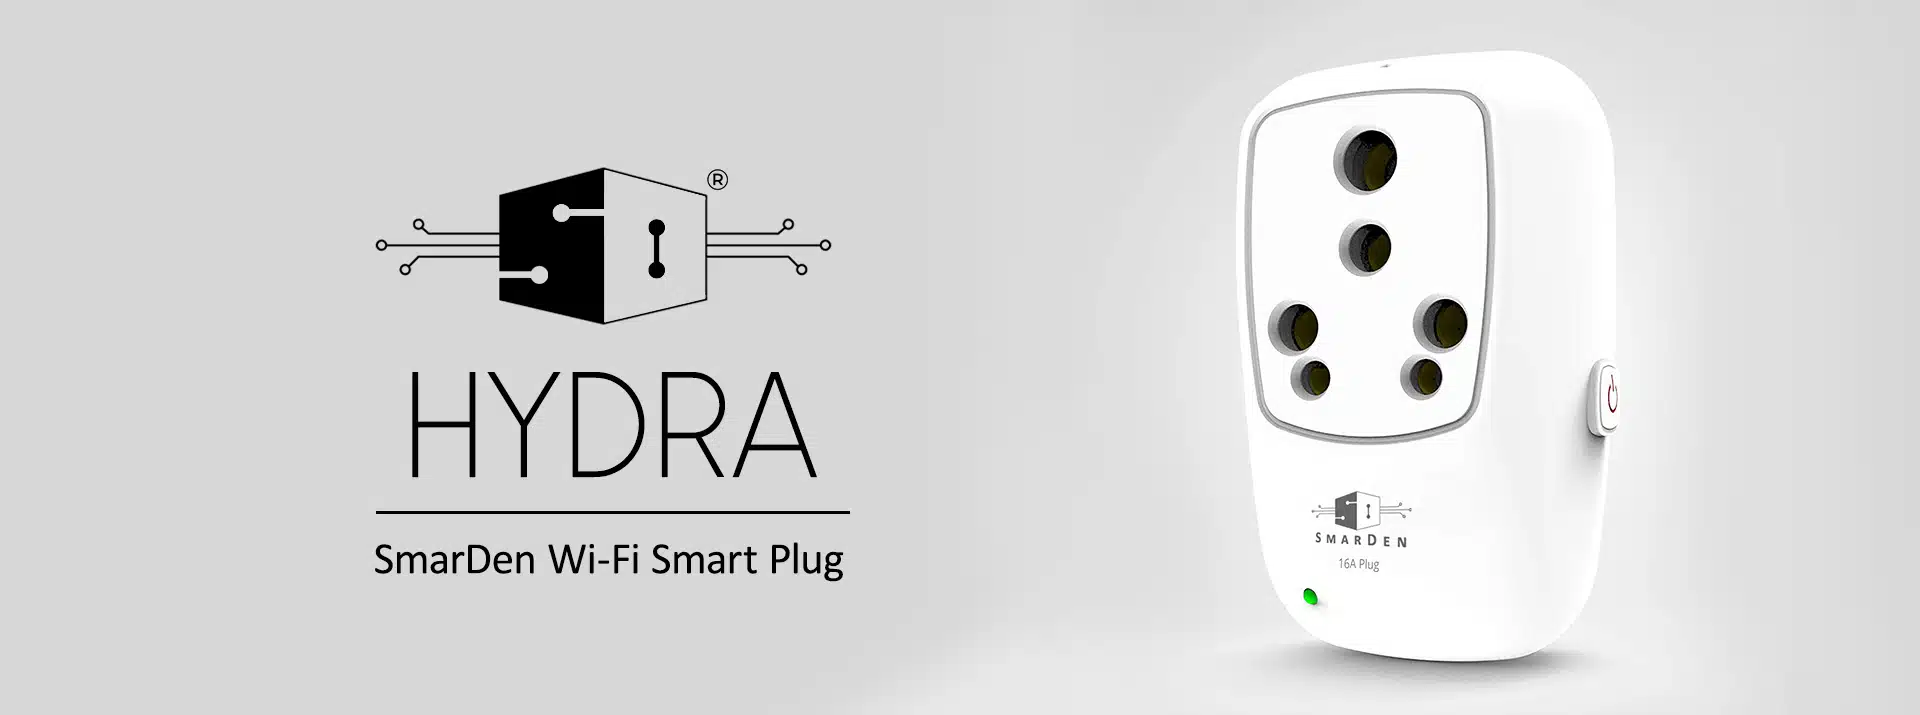 smart plug 16a